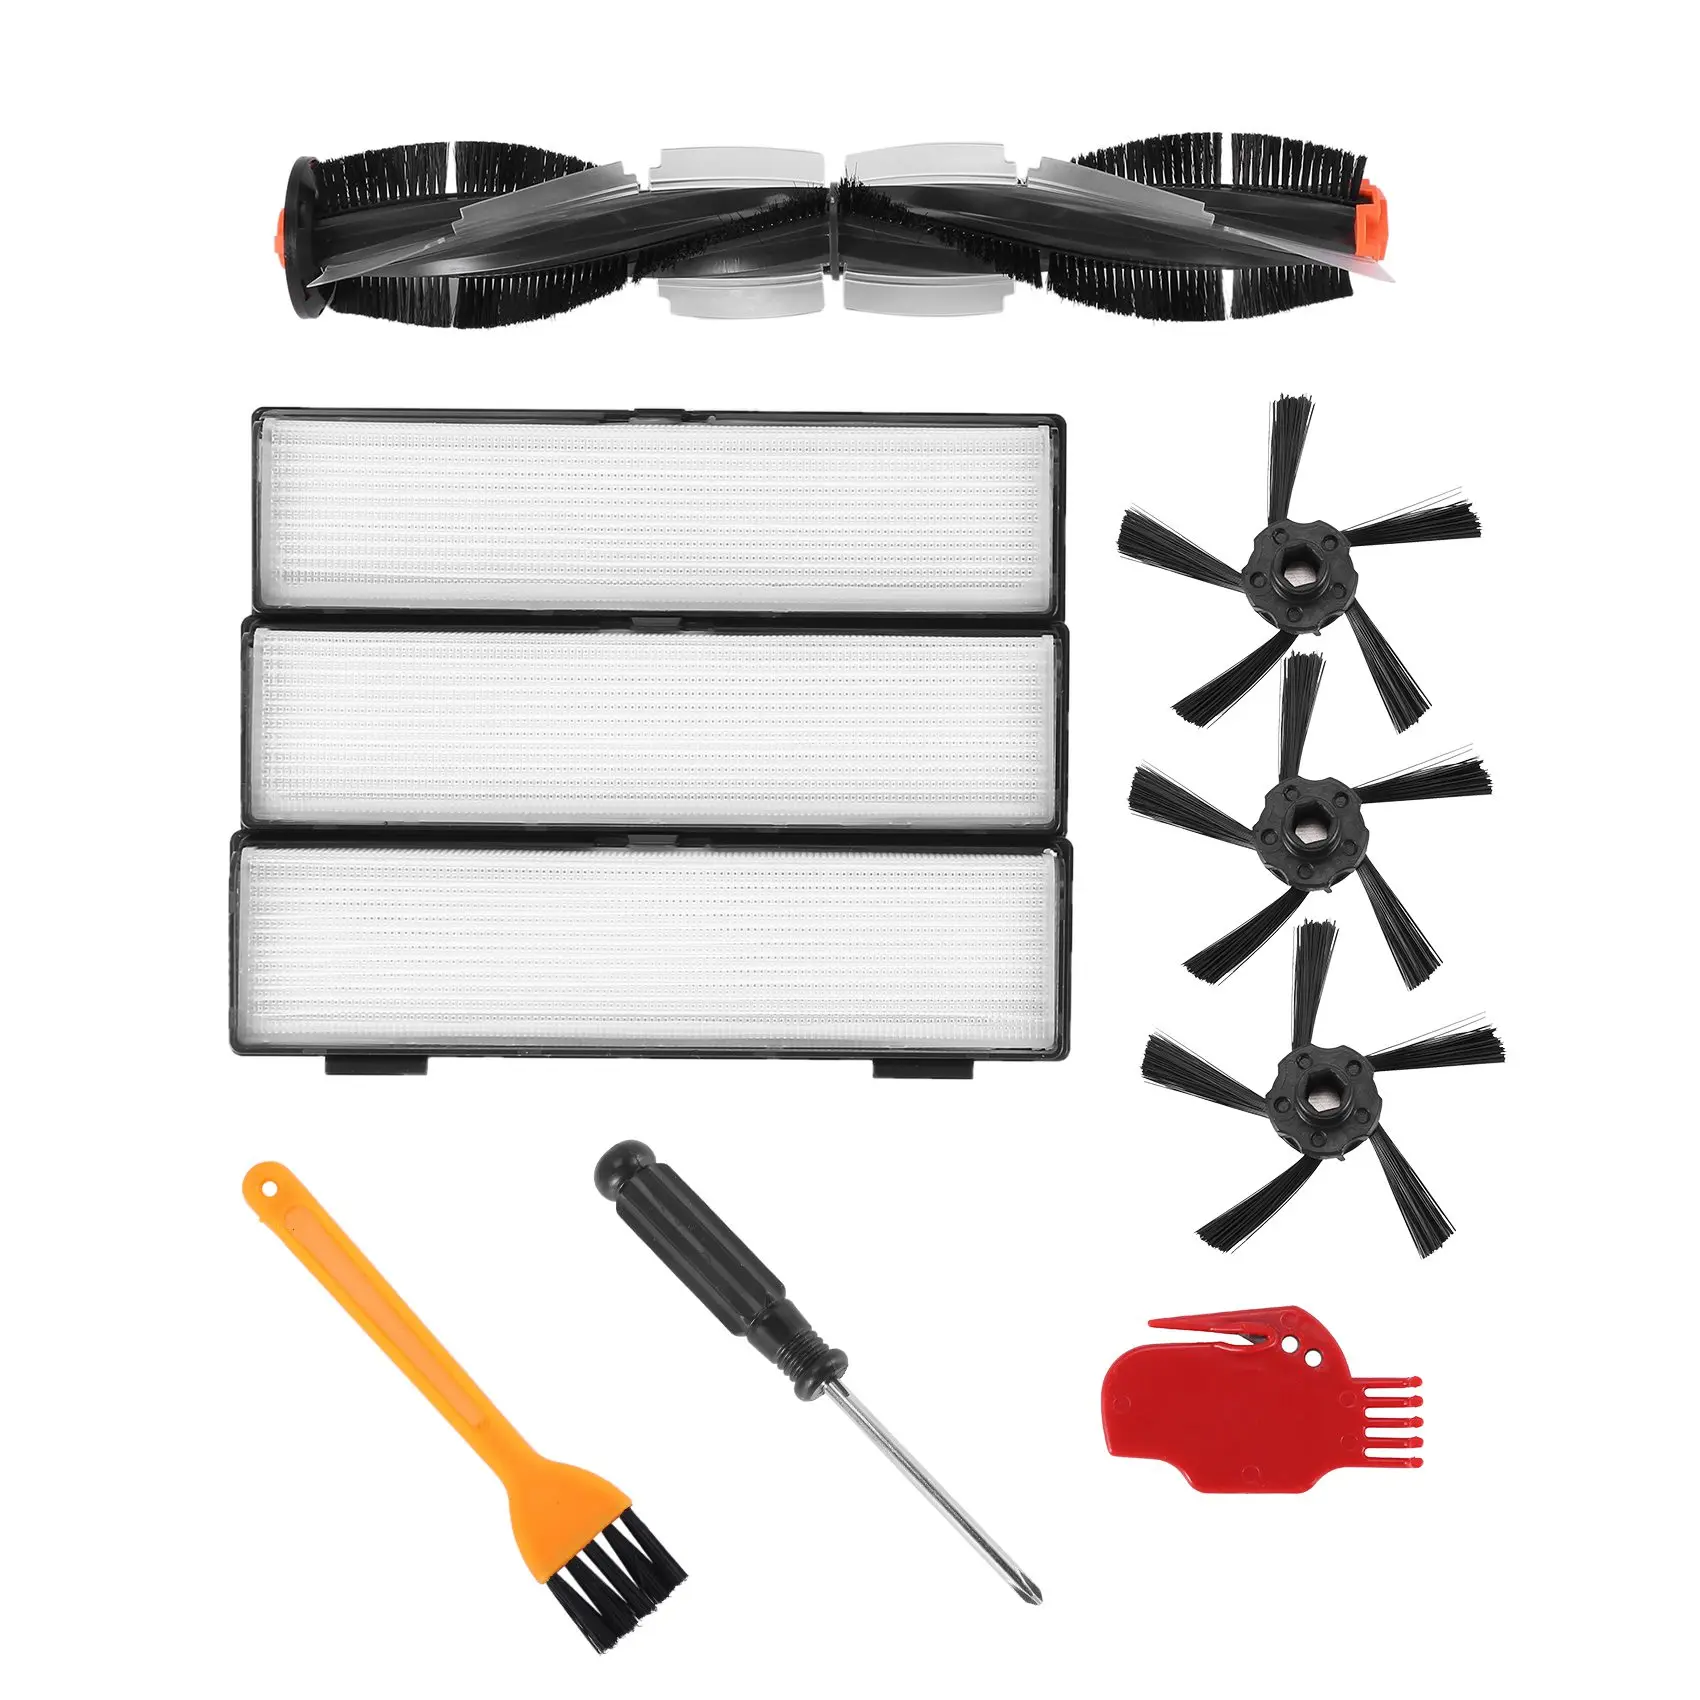 Filter Side Brush Kit For Neato Botvac D Series D3,D5,D75,D80,D85 Vacuum Cleaner 